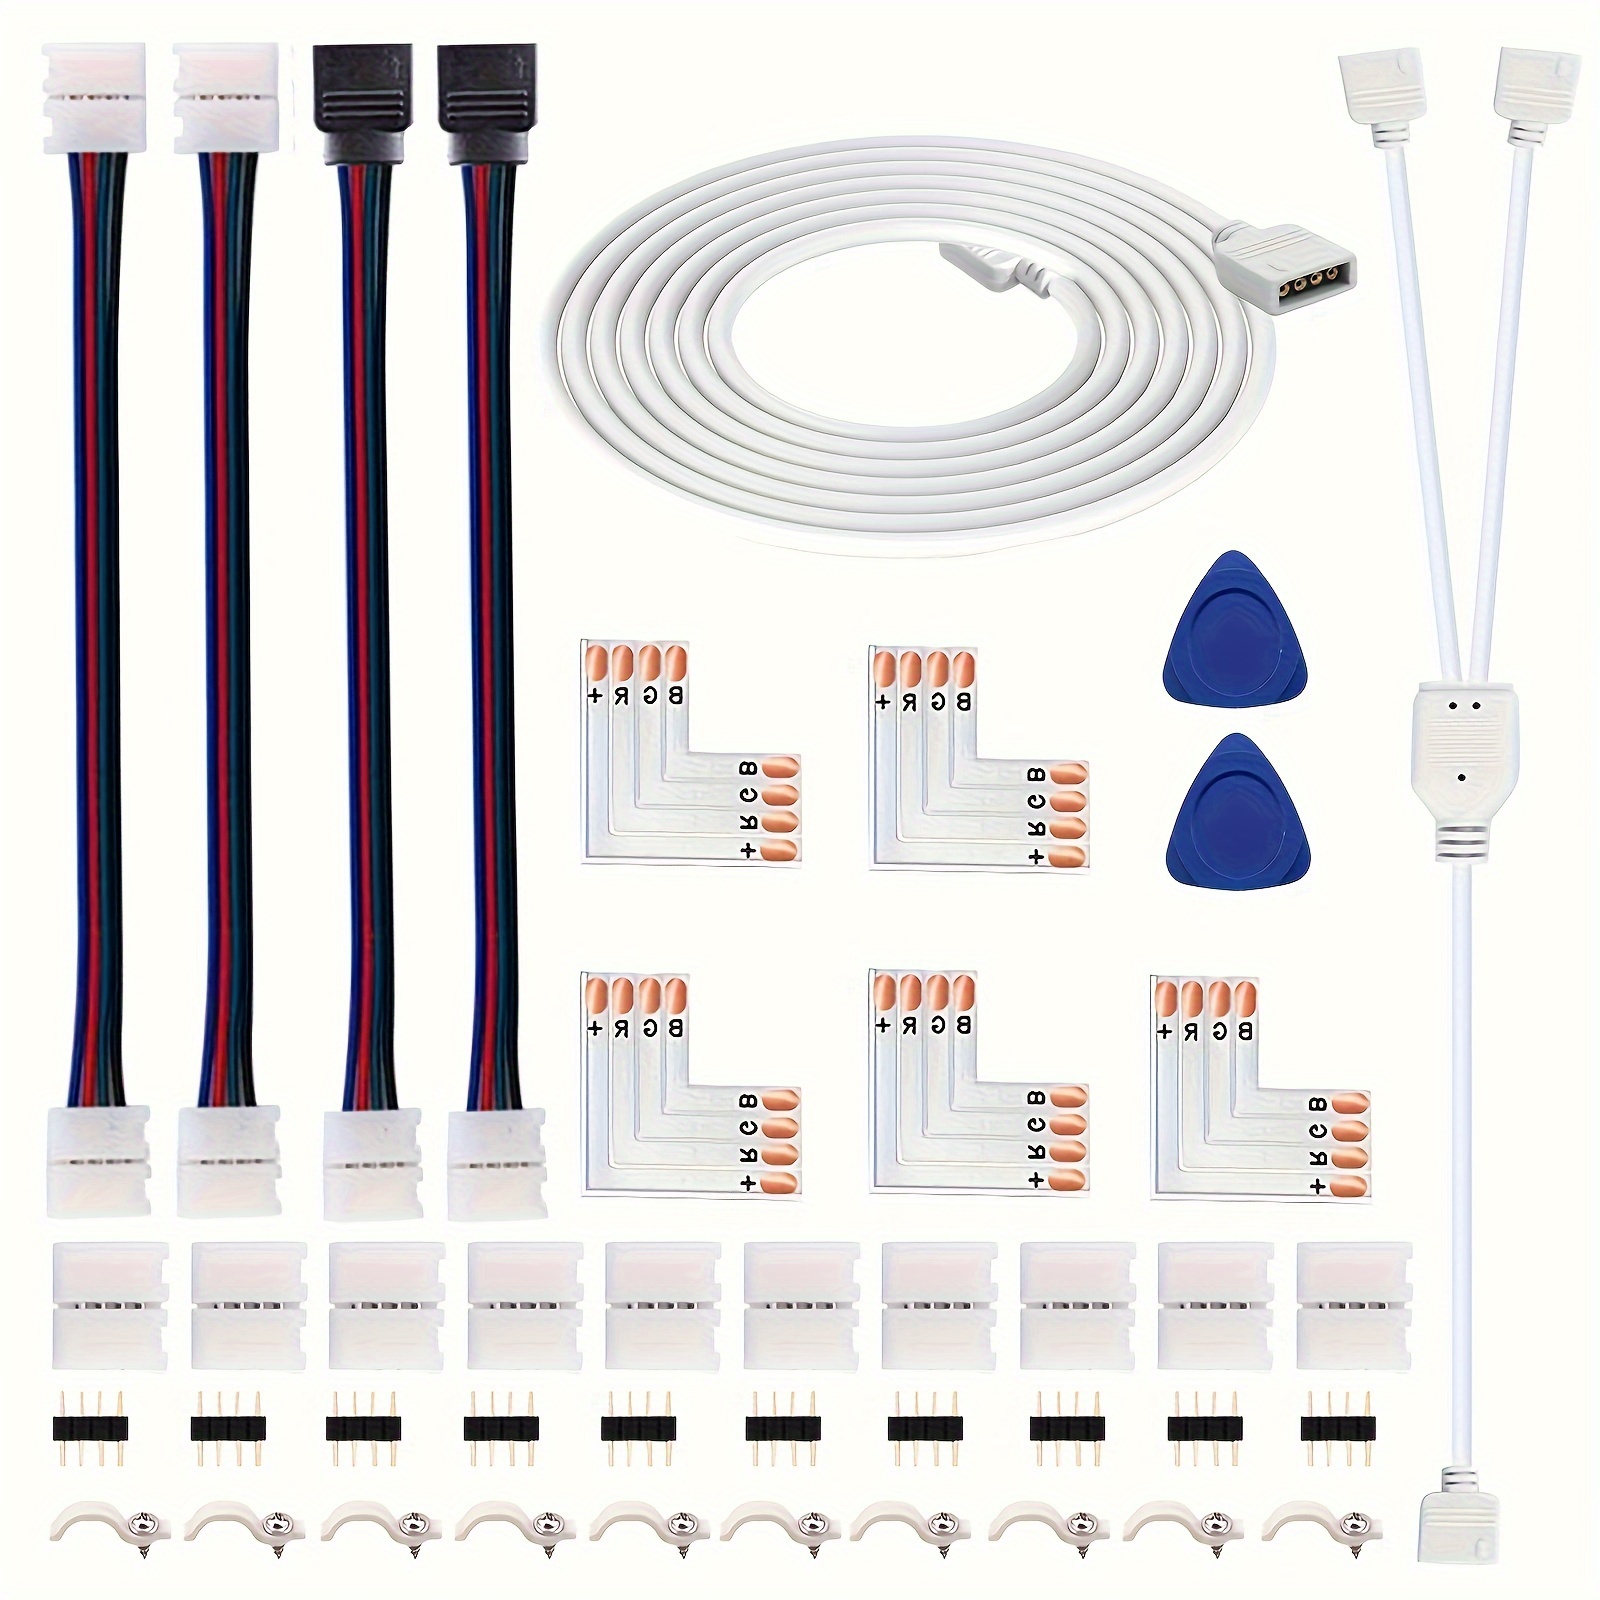 43 Stück 4-poliger LED-Stecker, L-förmiger Balken LED 4-polig 10